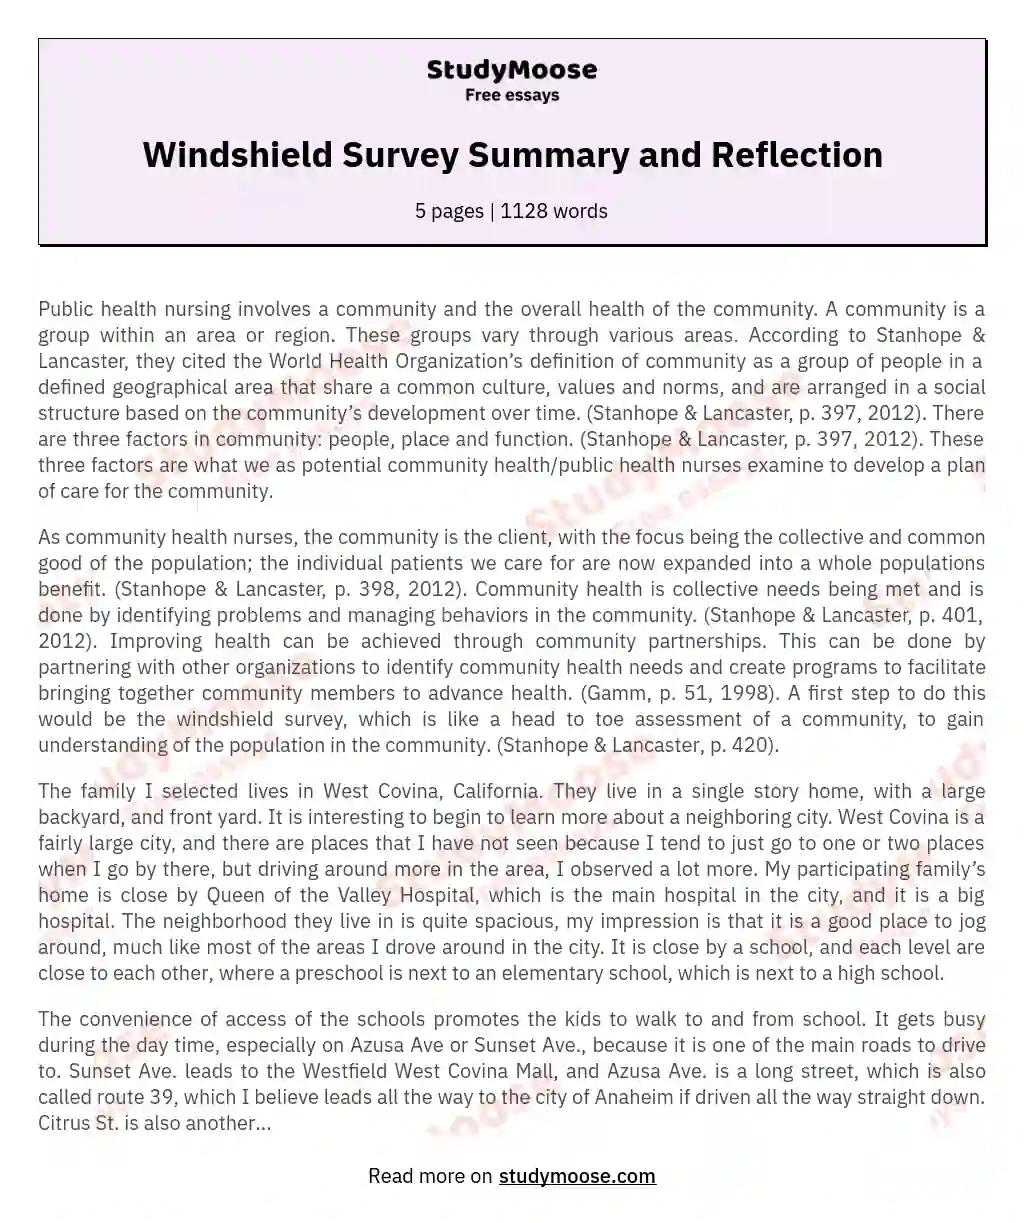 Windshield Survey Summary and Reflection essay